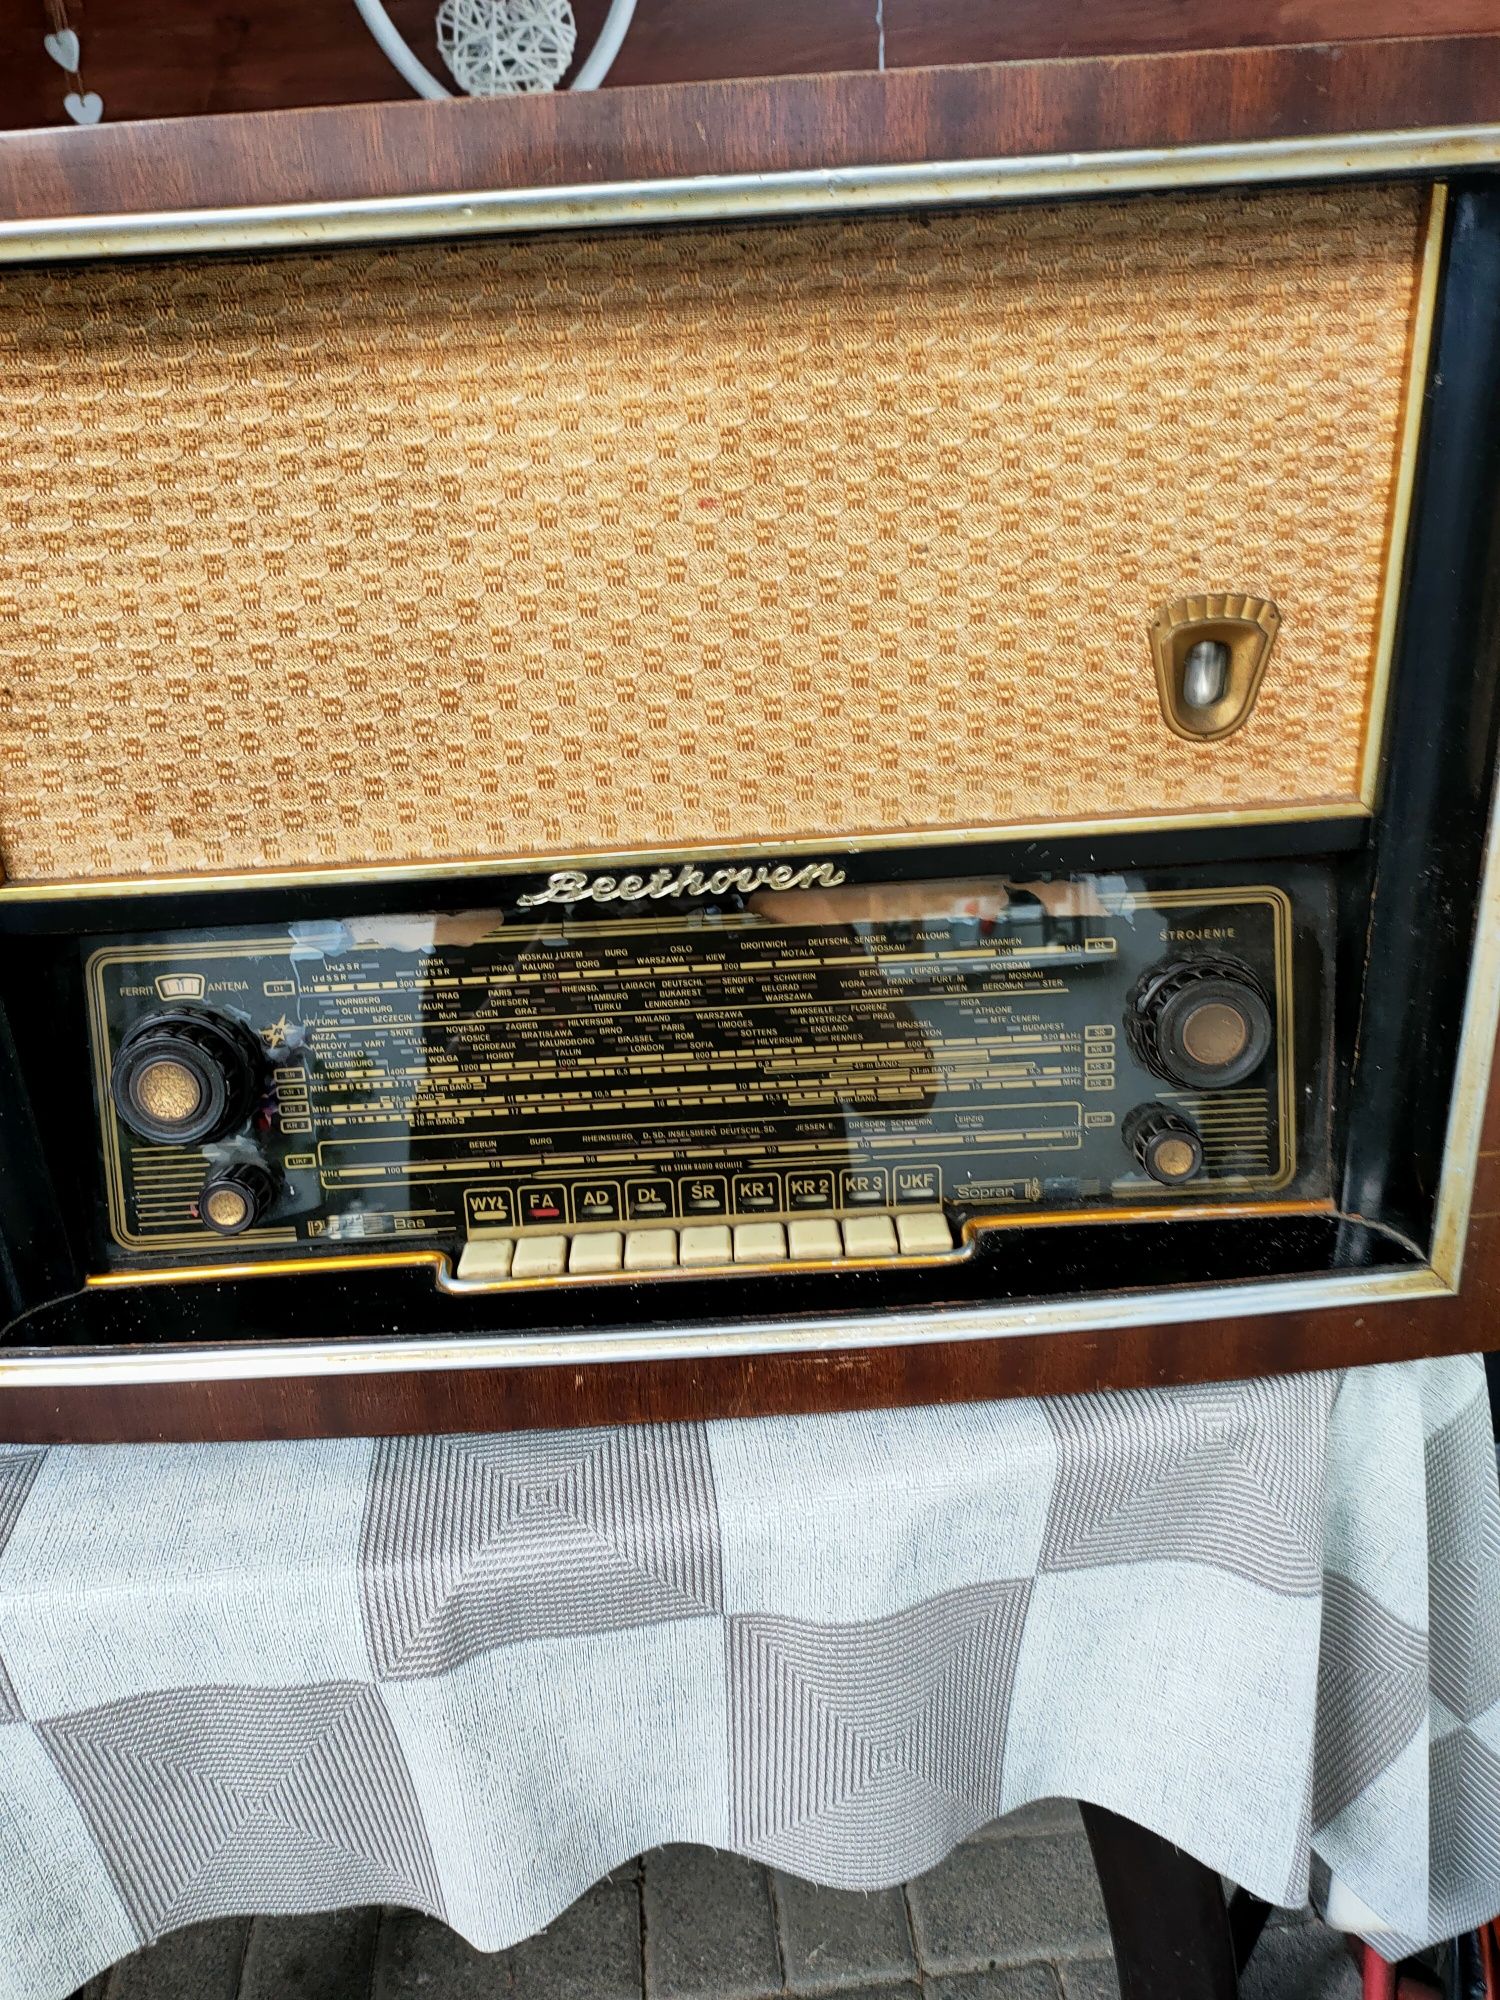 Stare radio Bethoven 2